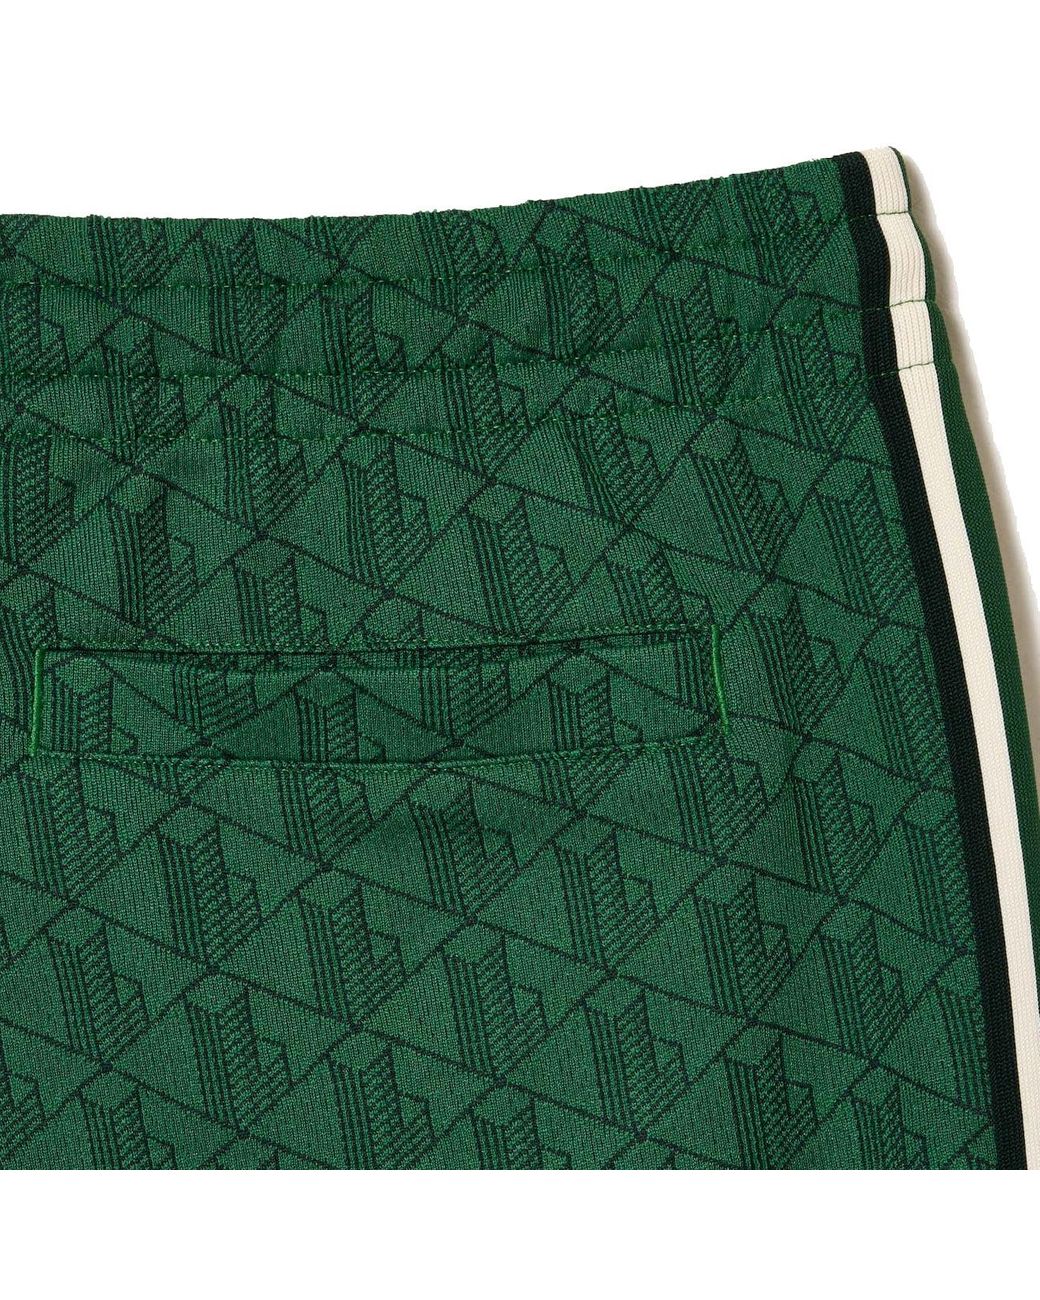 Lacoste - Monogram Track Pants - Green